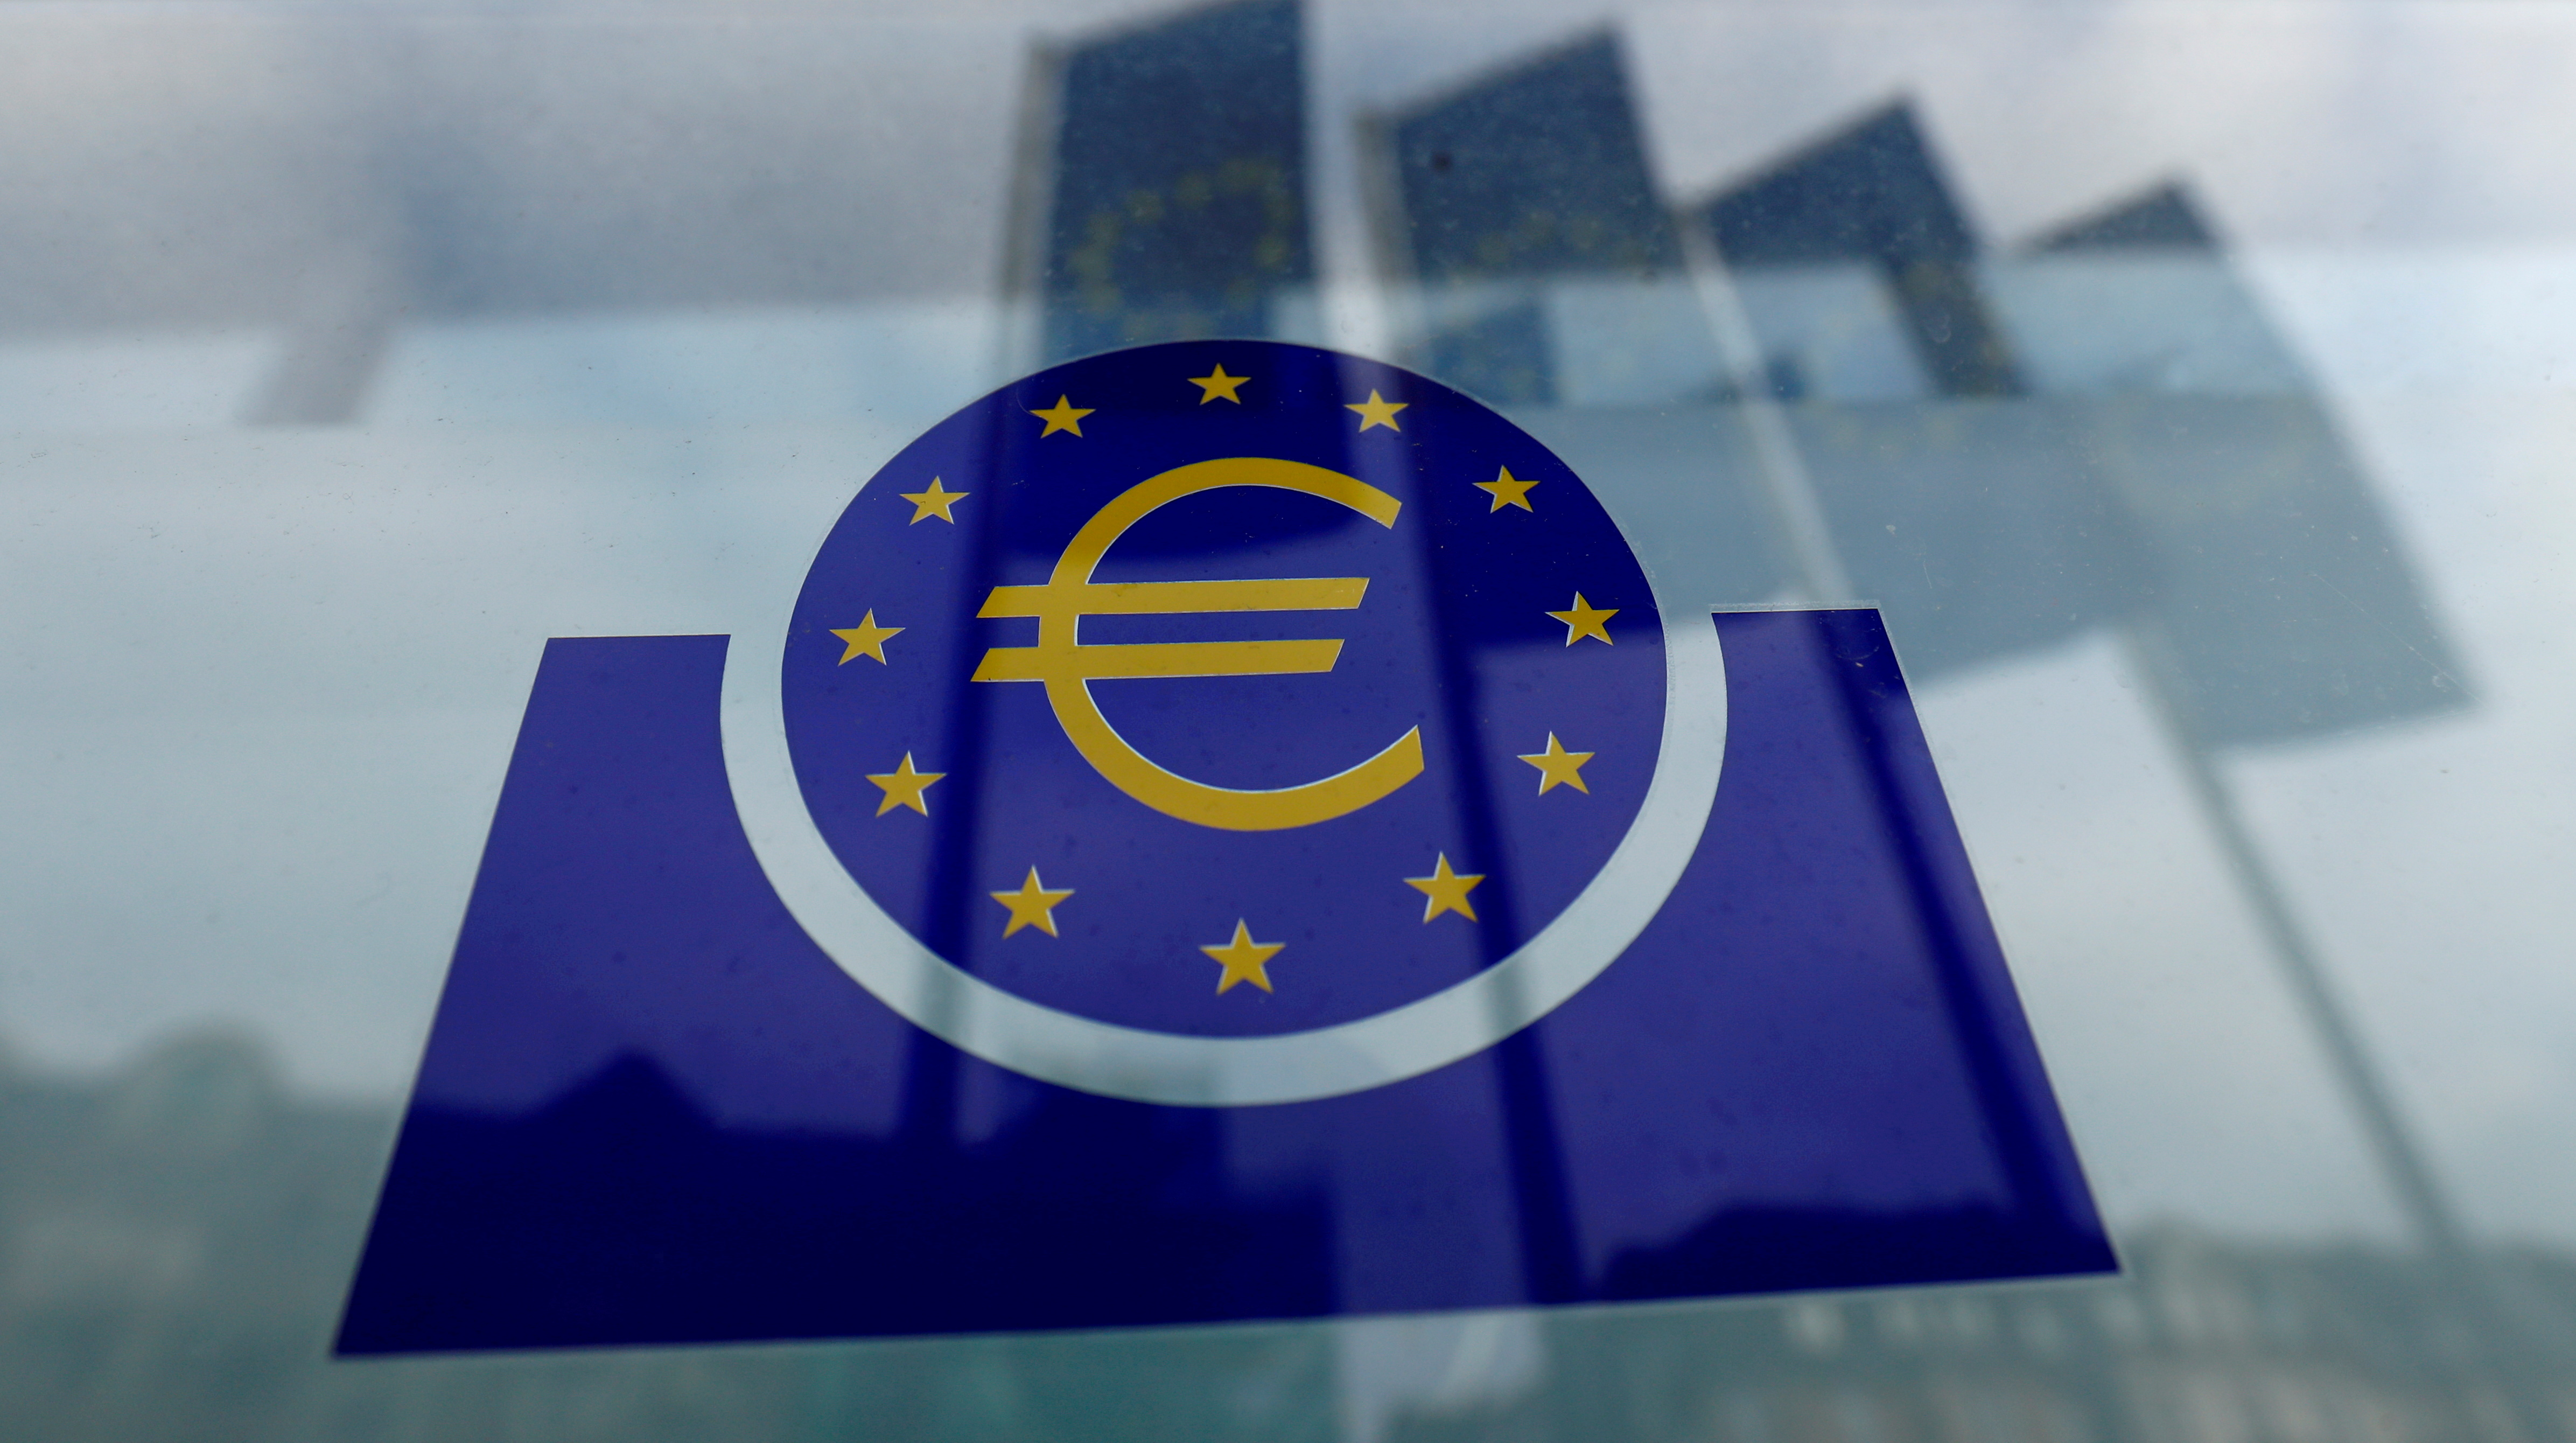 The European Central Bank (ECB) logo in Frankfurt, Germany, January 23, 2020. REUTERS/Ralph Orlowski/